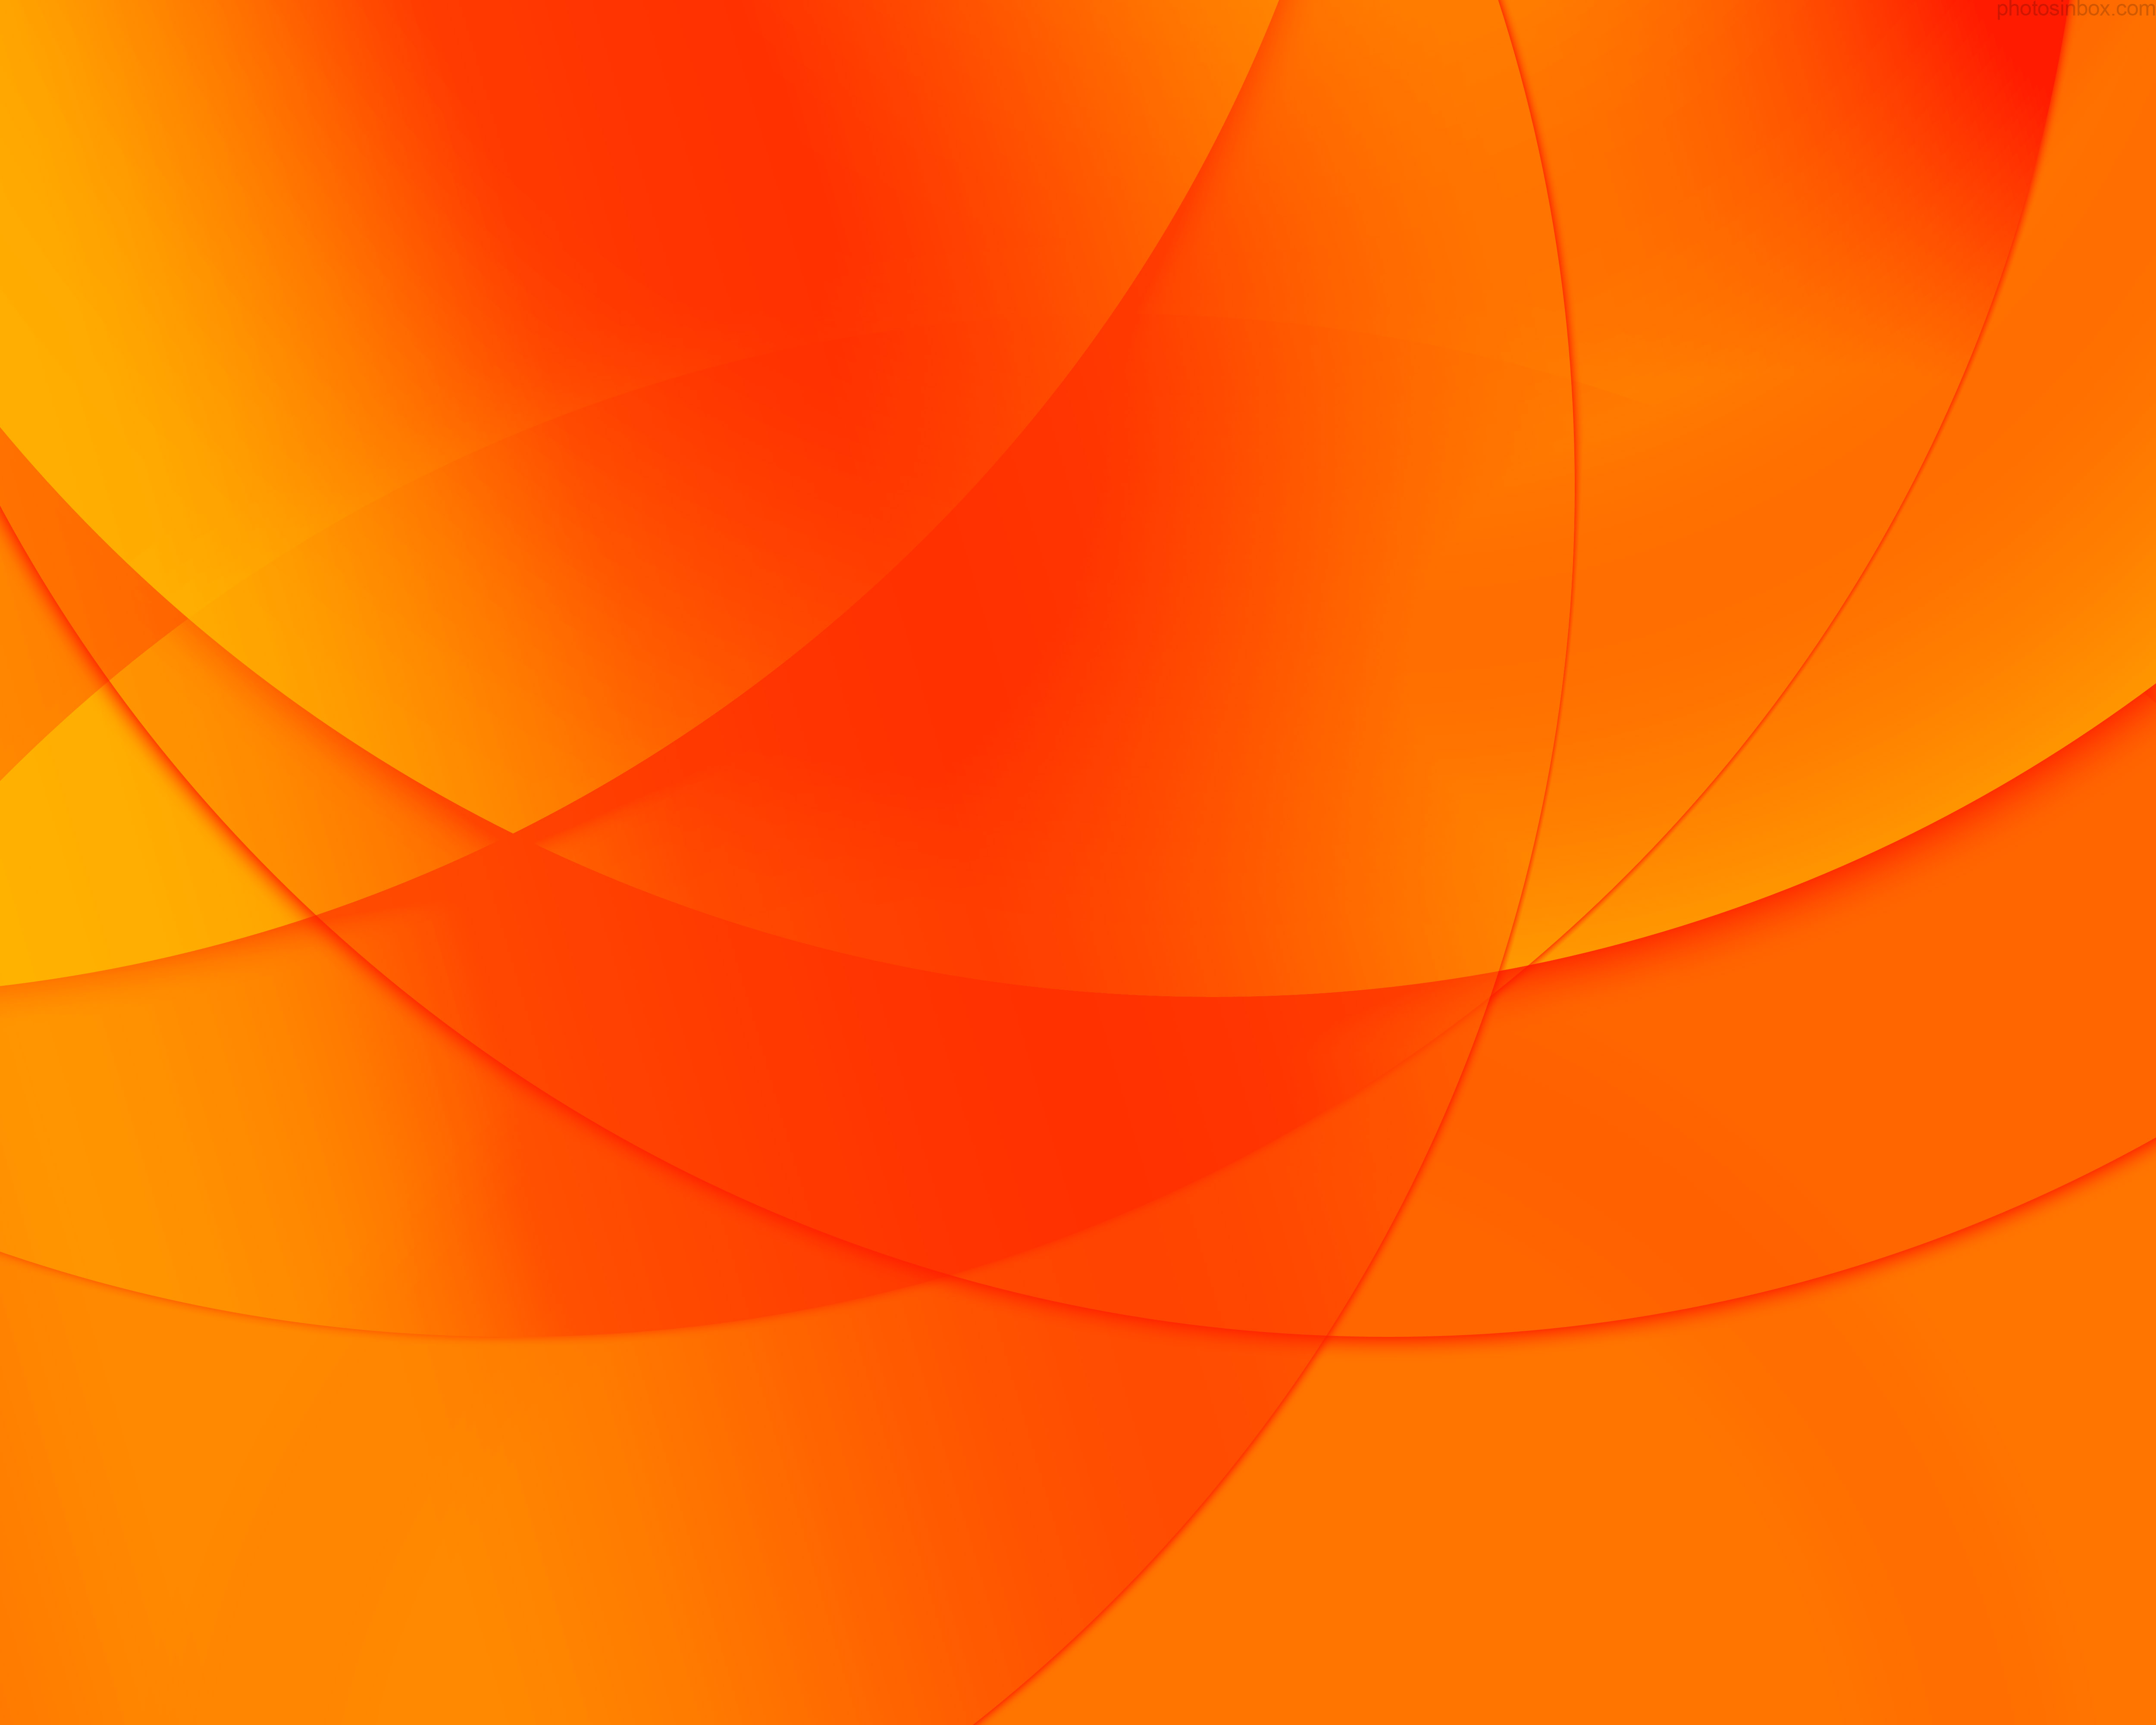 Free download Orange Wallpapers and Background Images stmednet [2880x1800]  for your Desktop, Mobile & Tablet | Explore 35+ Abstract Orange Wallpapers  | Orange Backgrounds, Orange Wallpapers, Abstract Orange Wallpaper